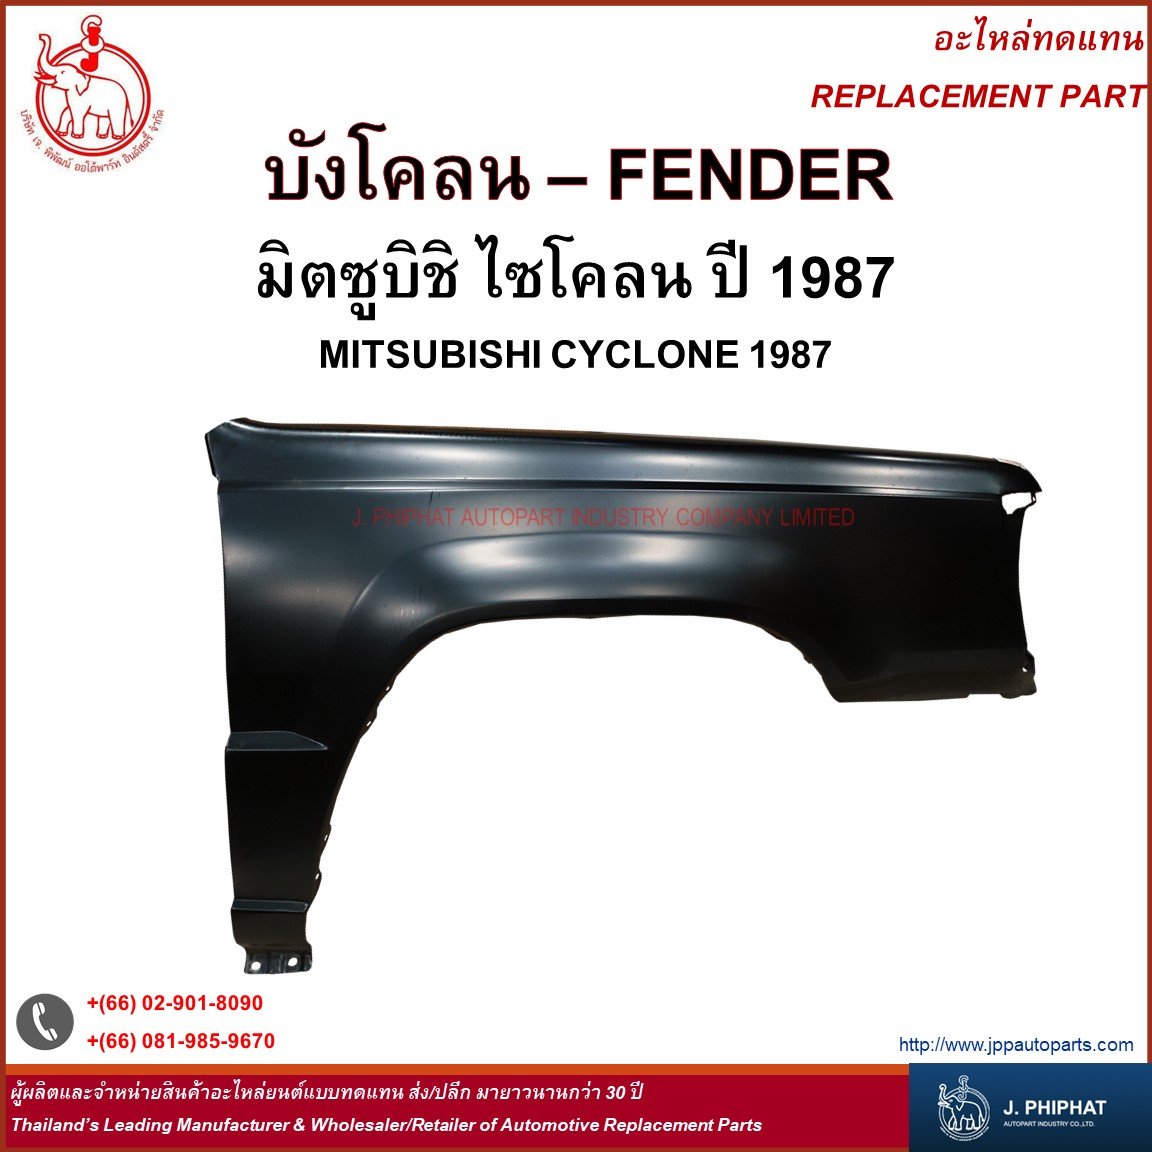 Fender - Mitsubishi Cyclone 1987